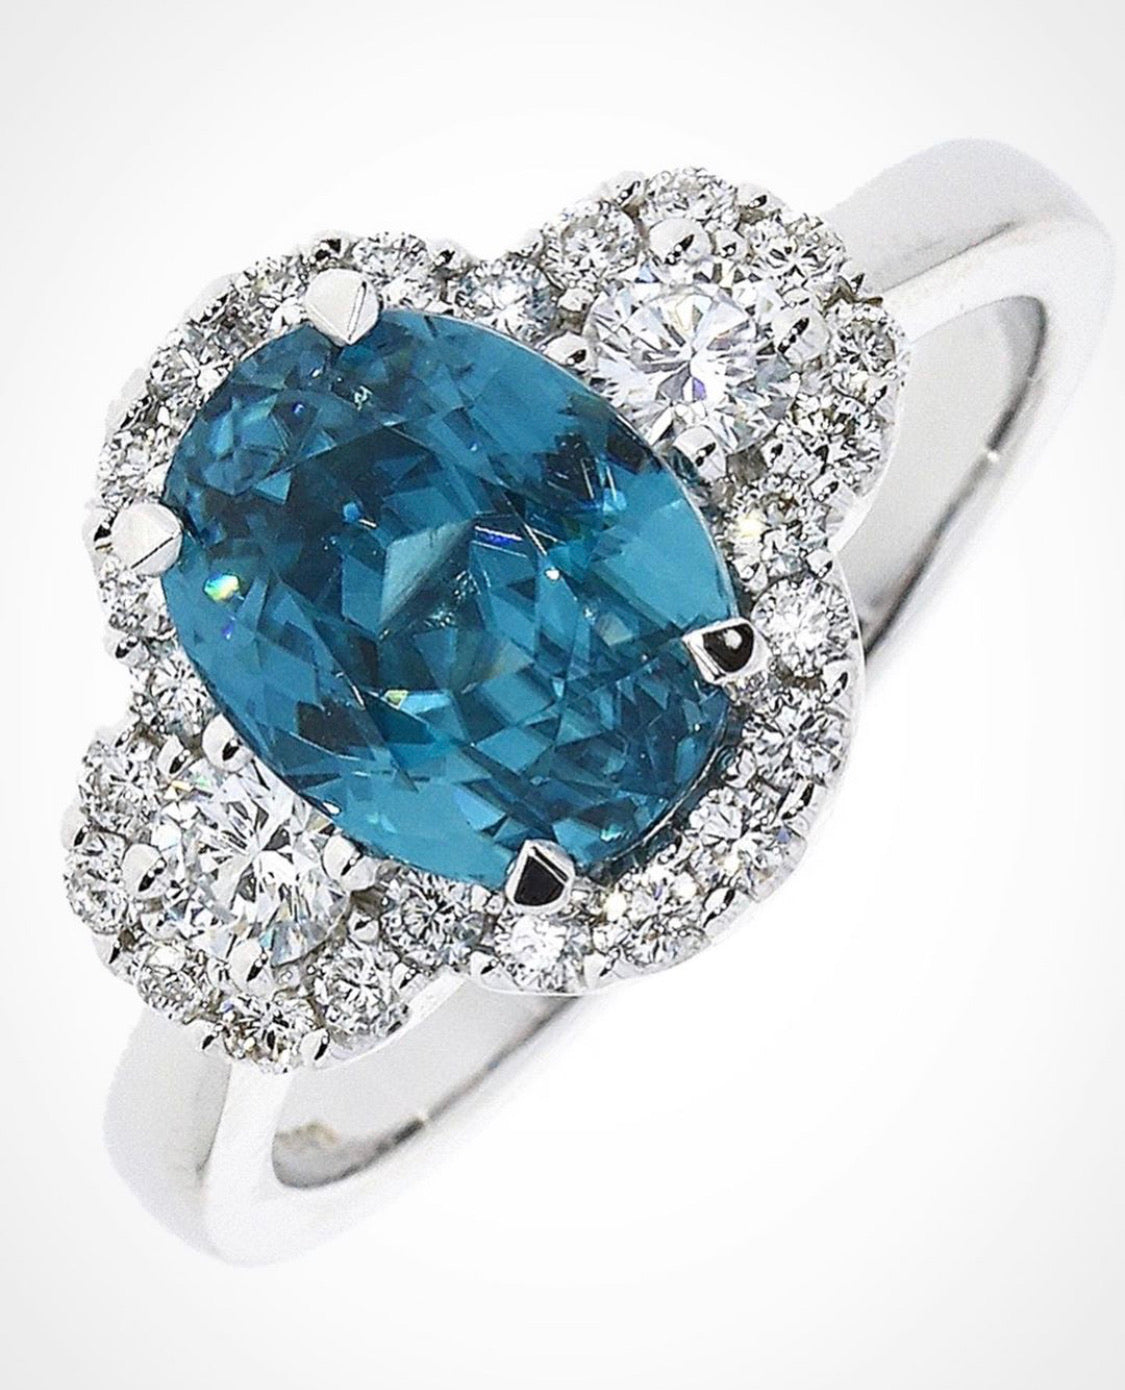 18ct White Gold Blue Zircon & Diamond Ring Size M 1/2 Blue zircon 3.93ct Diamonds 0.24ct in total